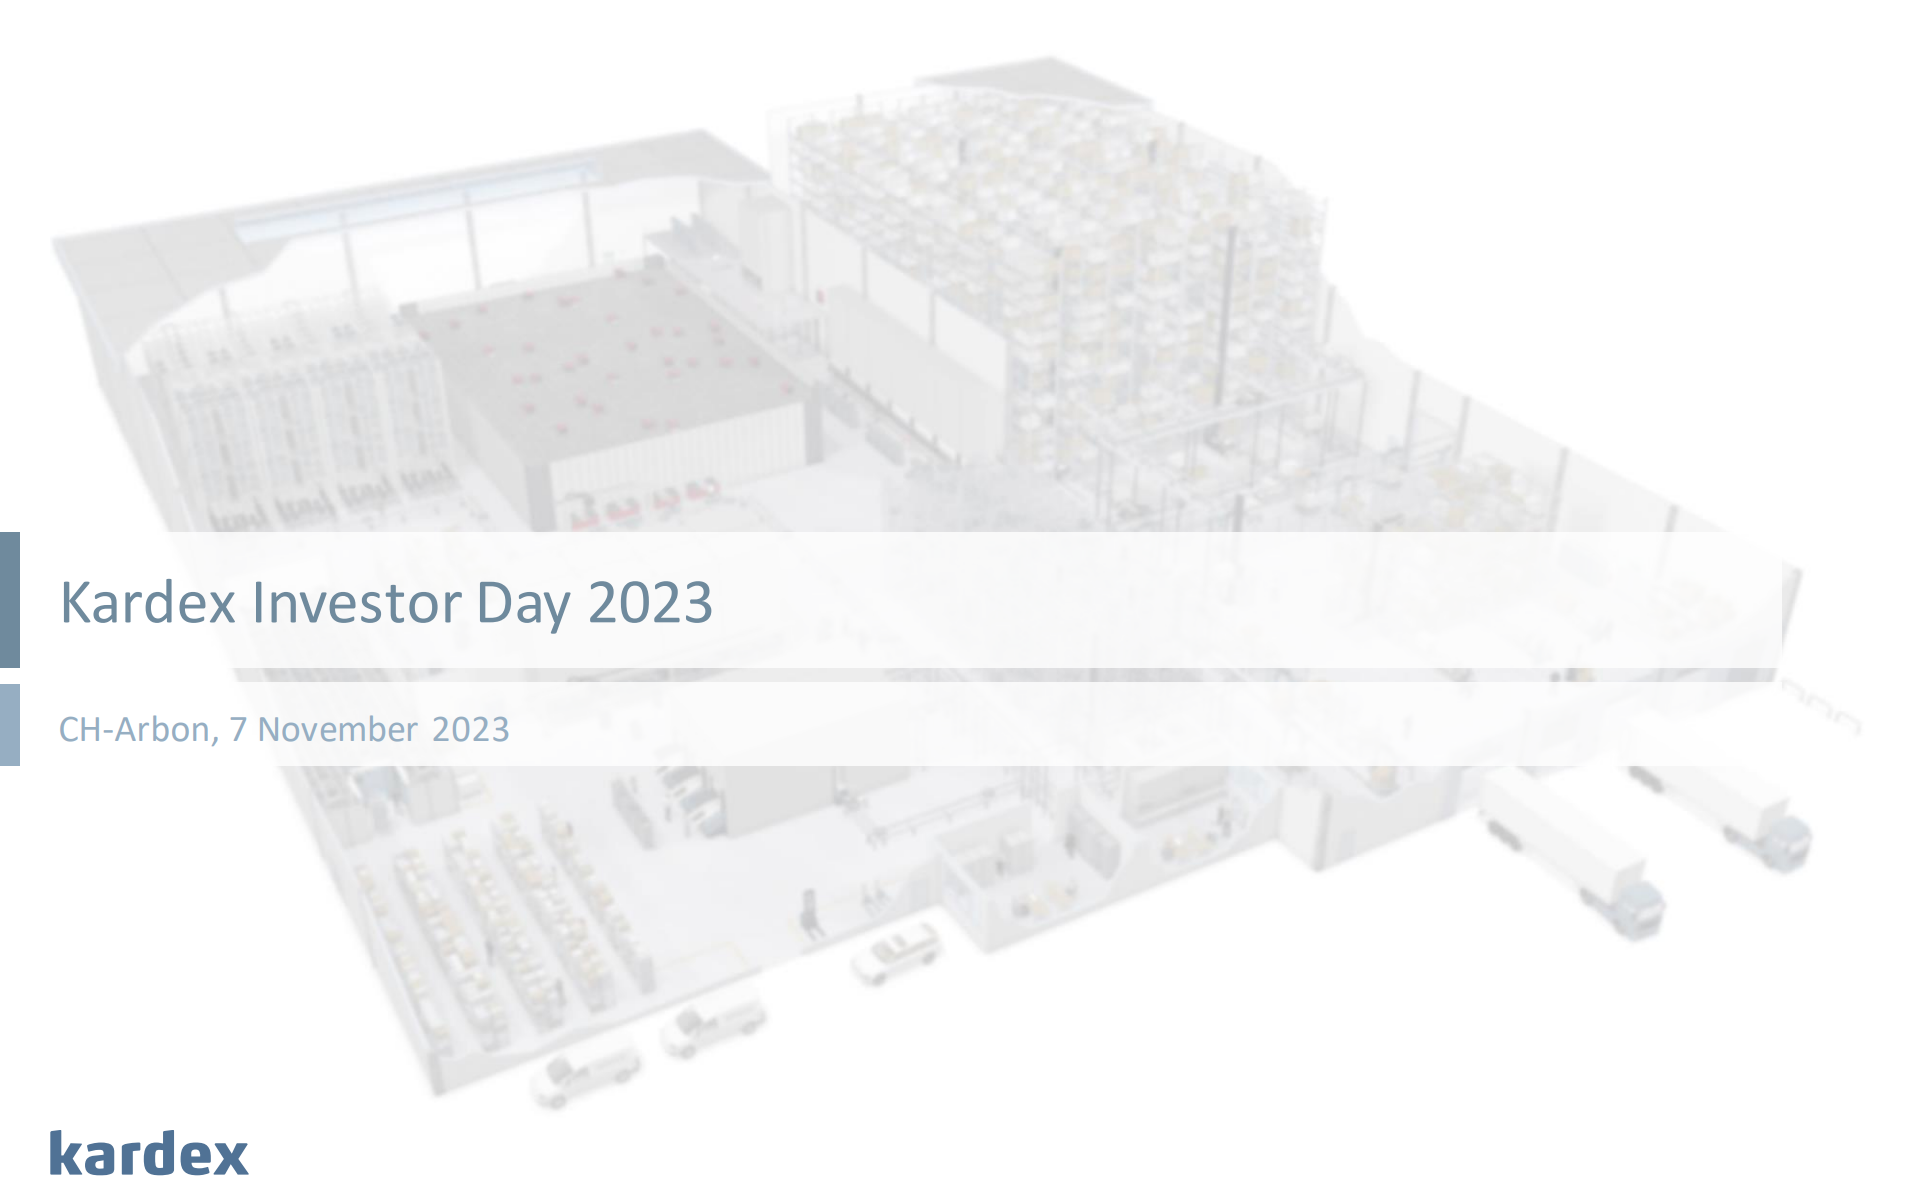 Kardex Investor Day 2023